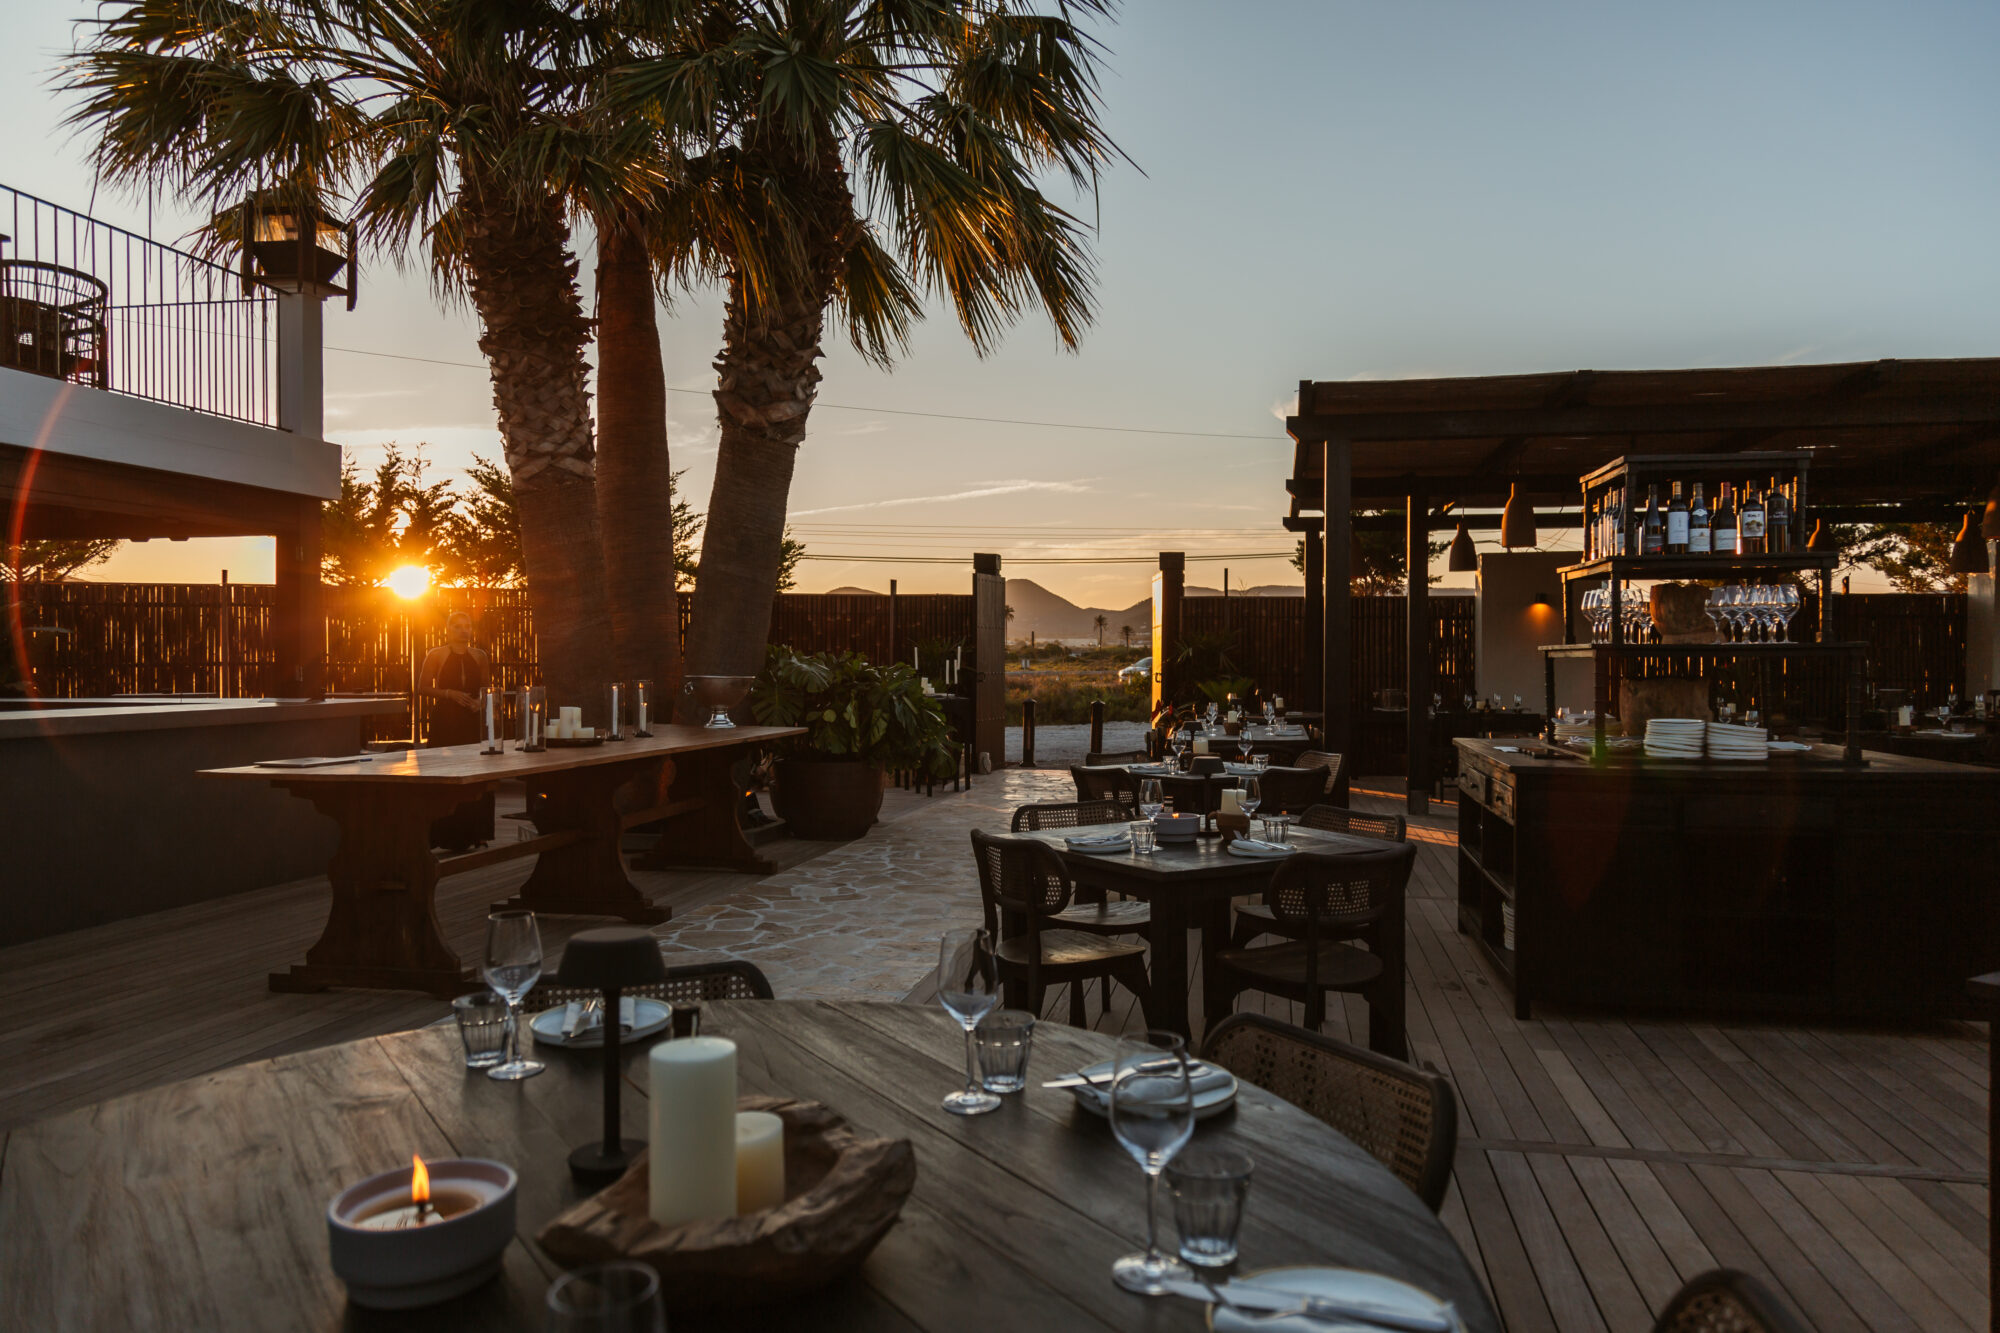 The Main Ibiza with a beautiful sunset